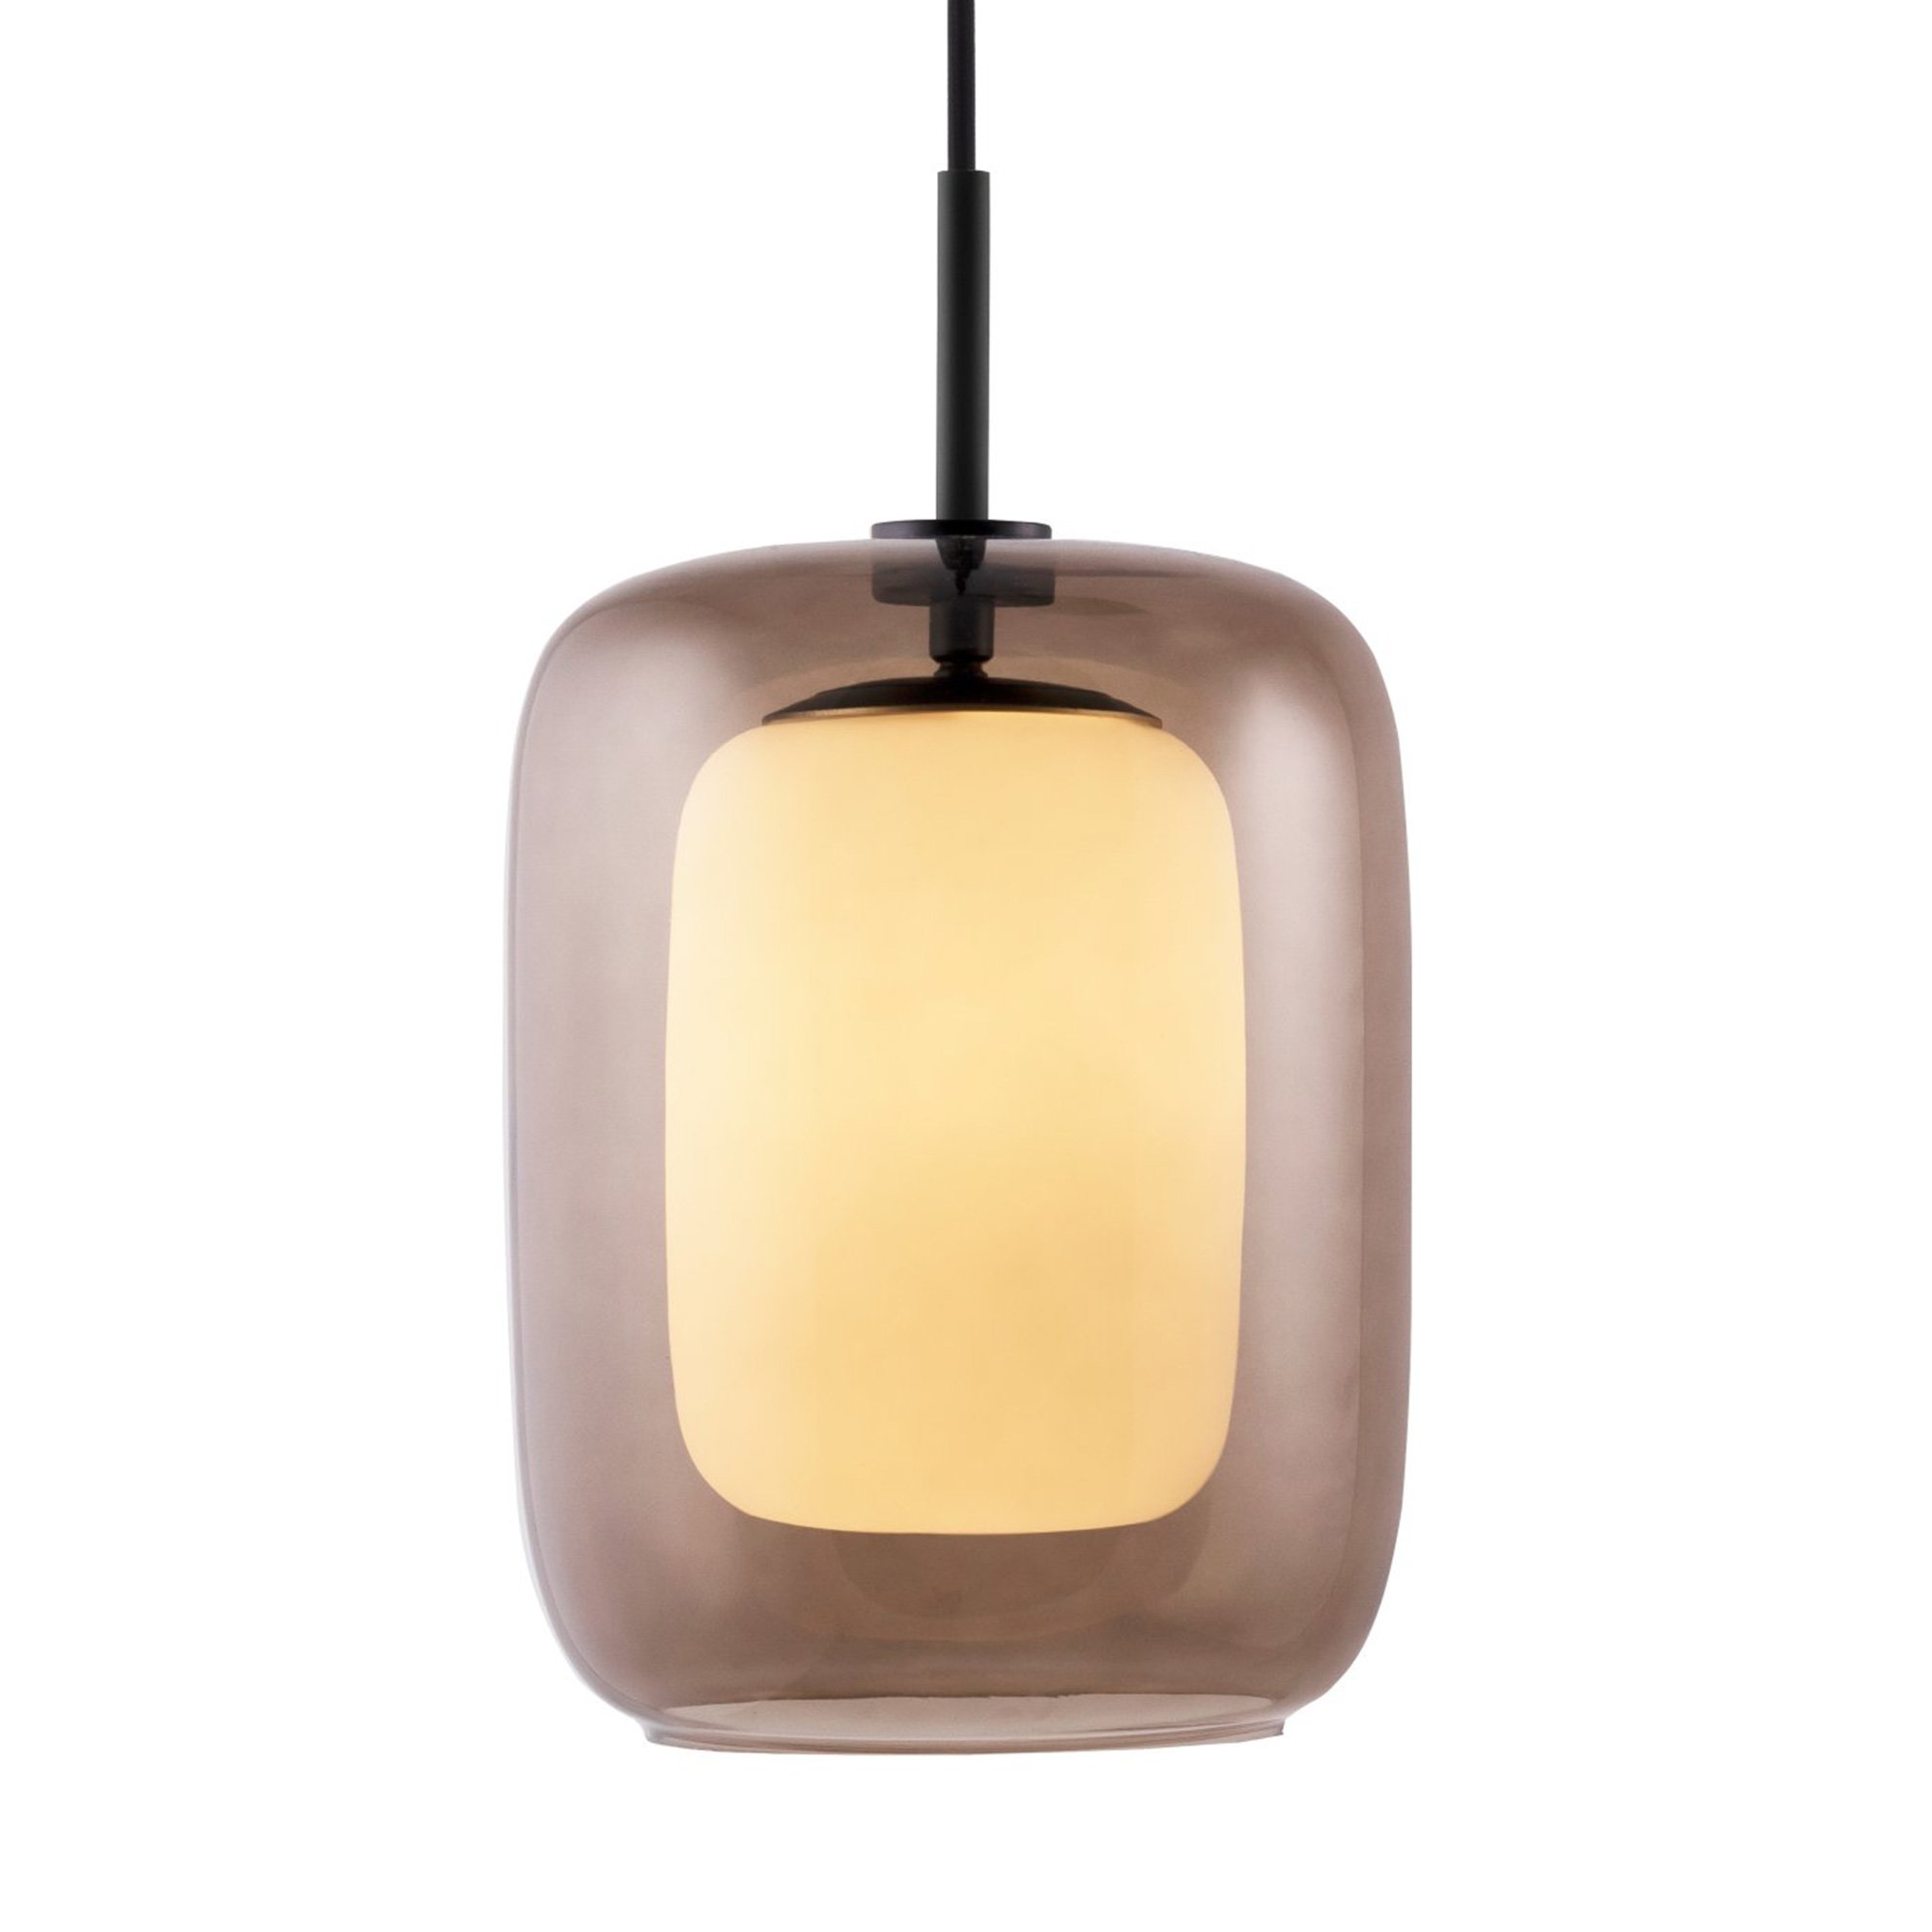 Globen Lighting Cuboza loftslampe, 20 cm, brun/hvid